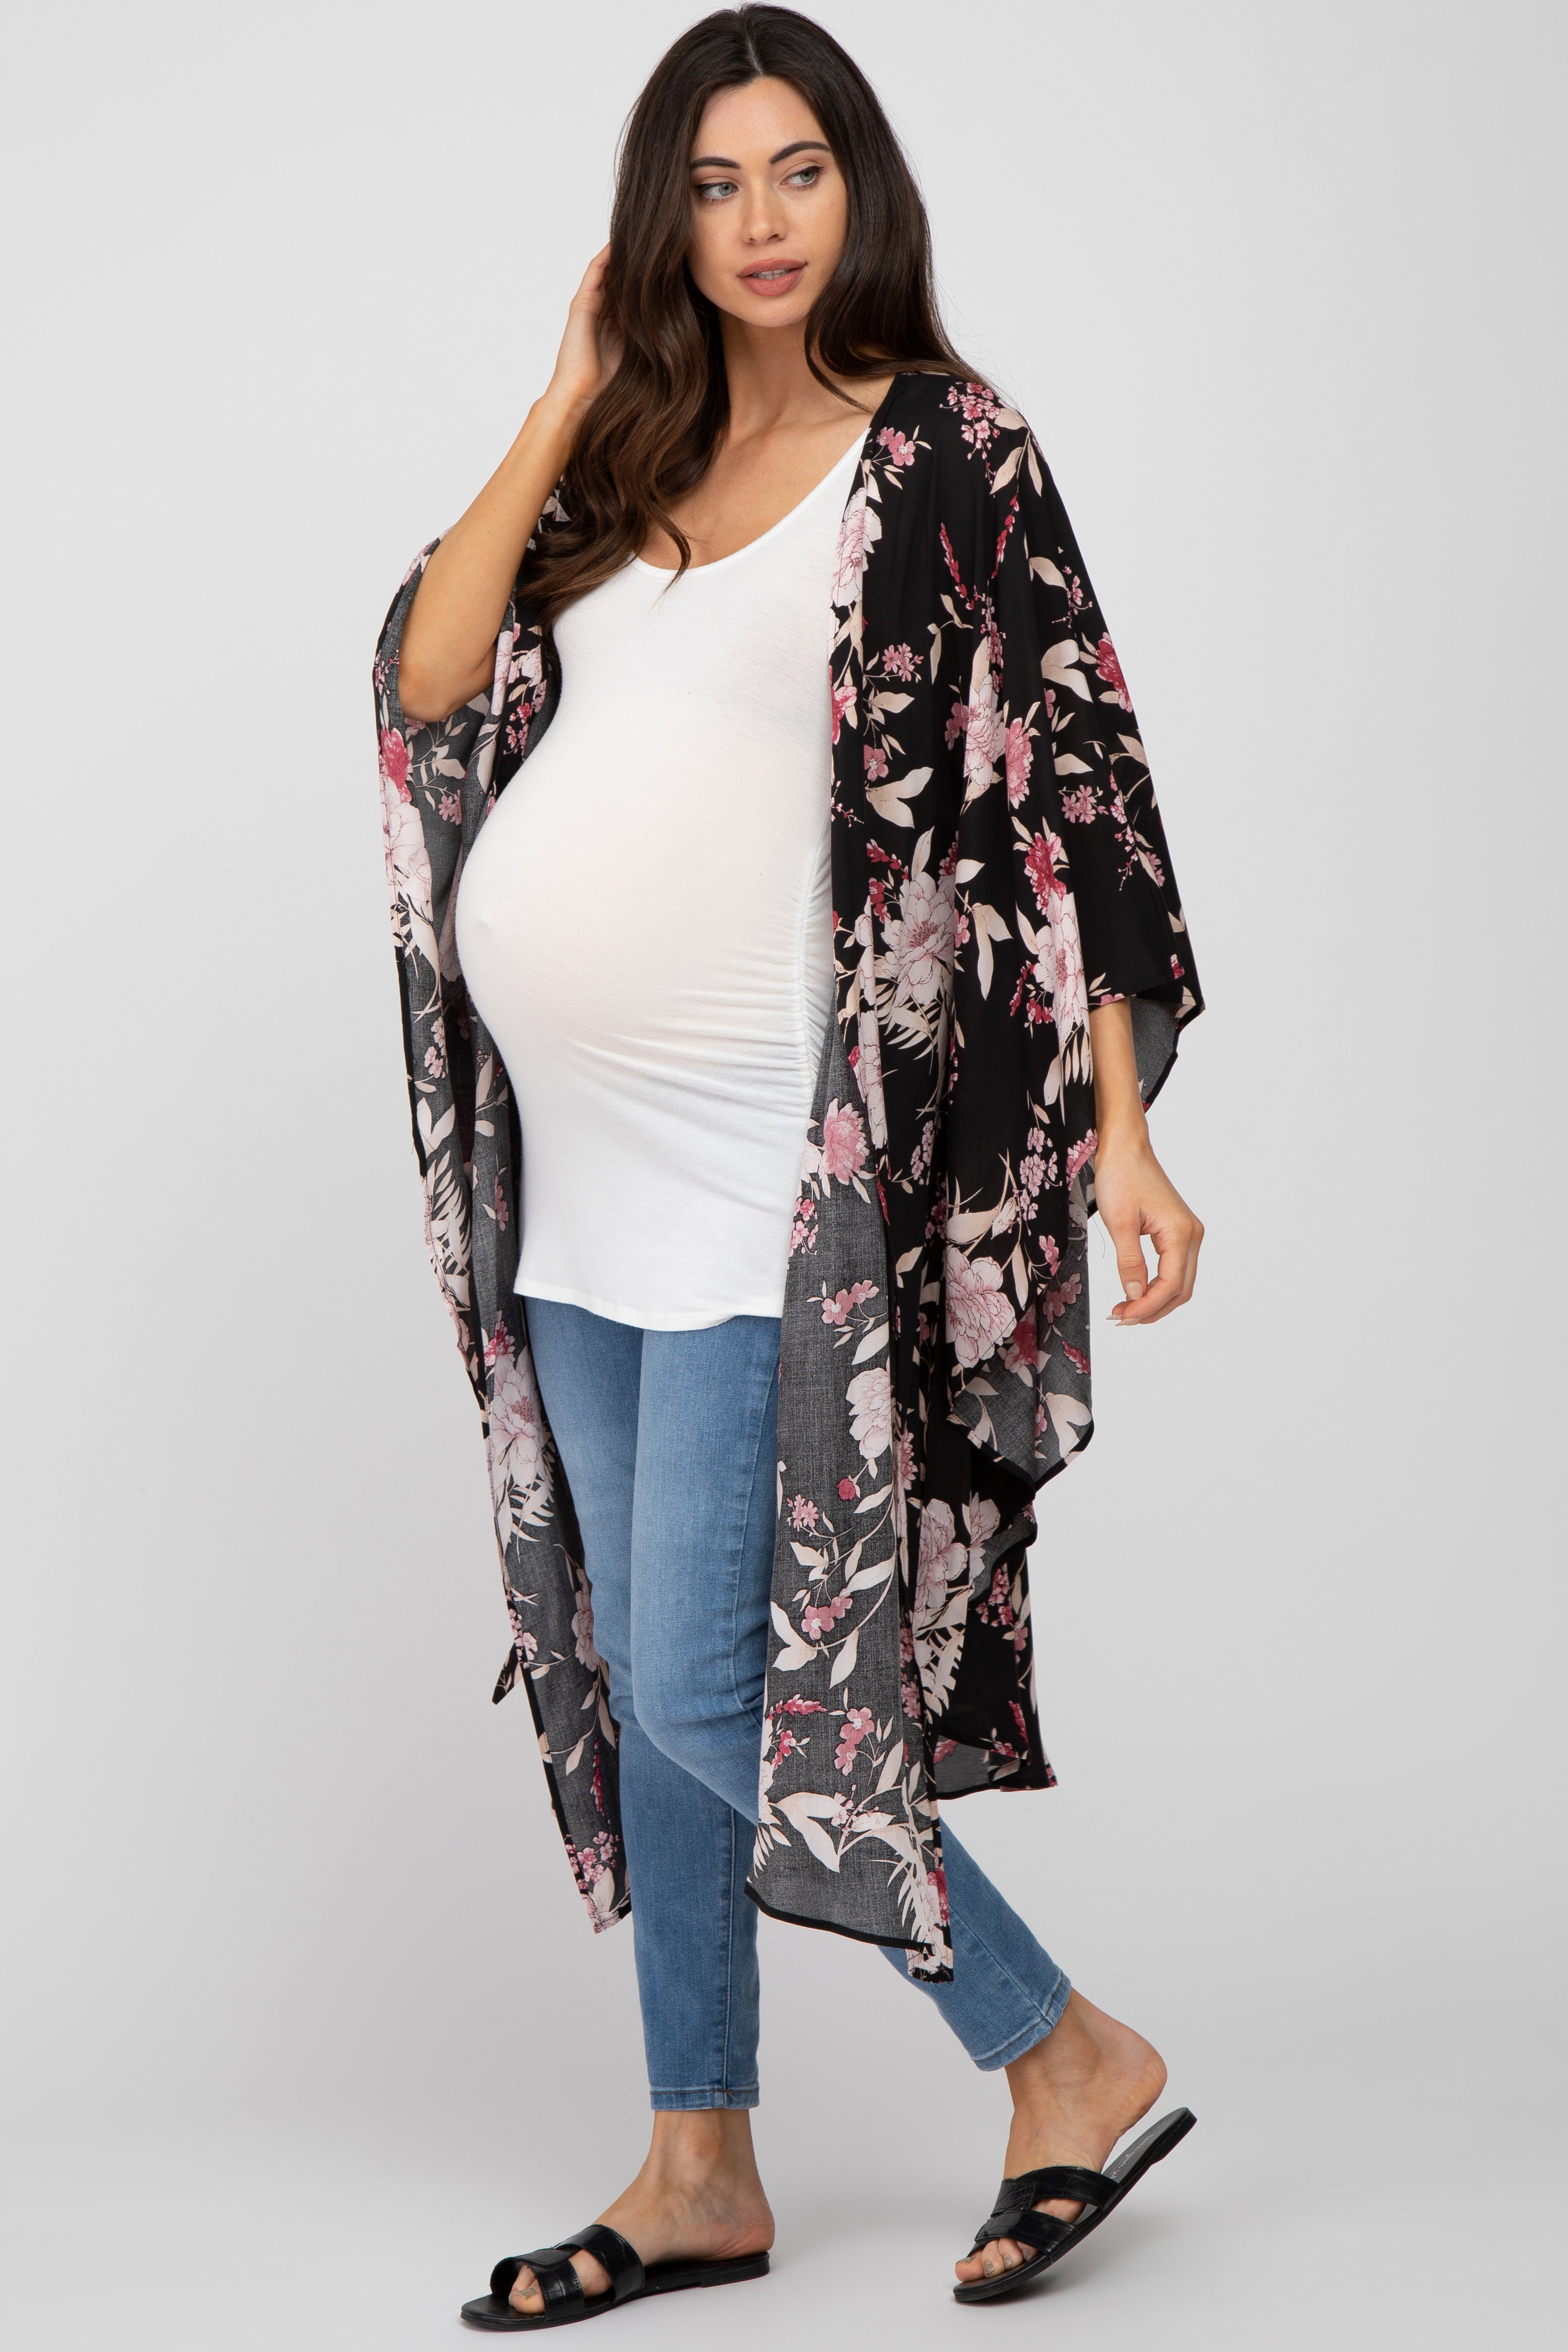 Black Floral Flowy Round Hem Maternity Cover-Up– PinkBlush